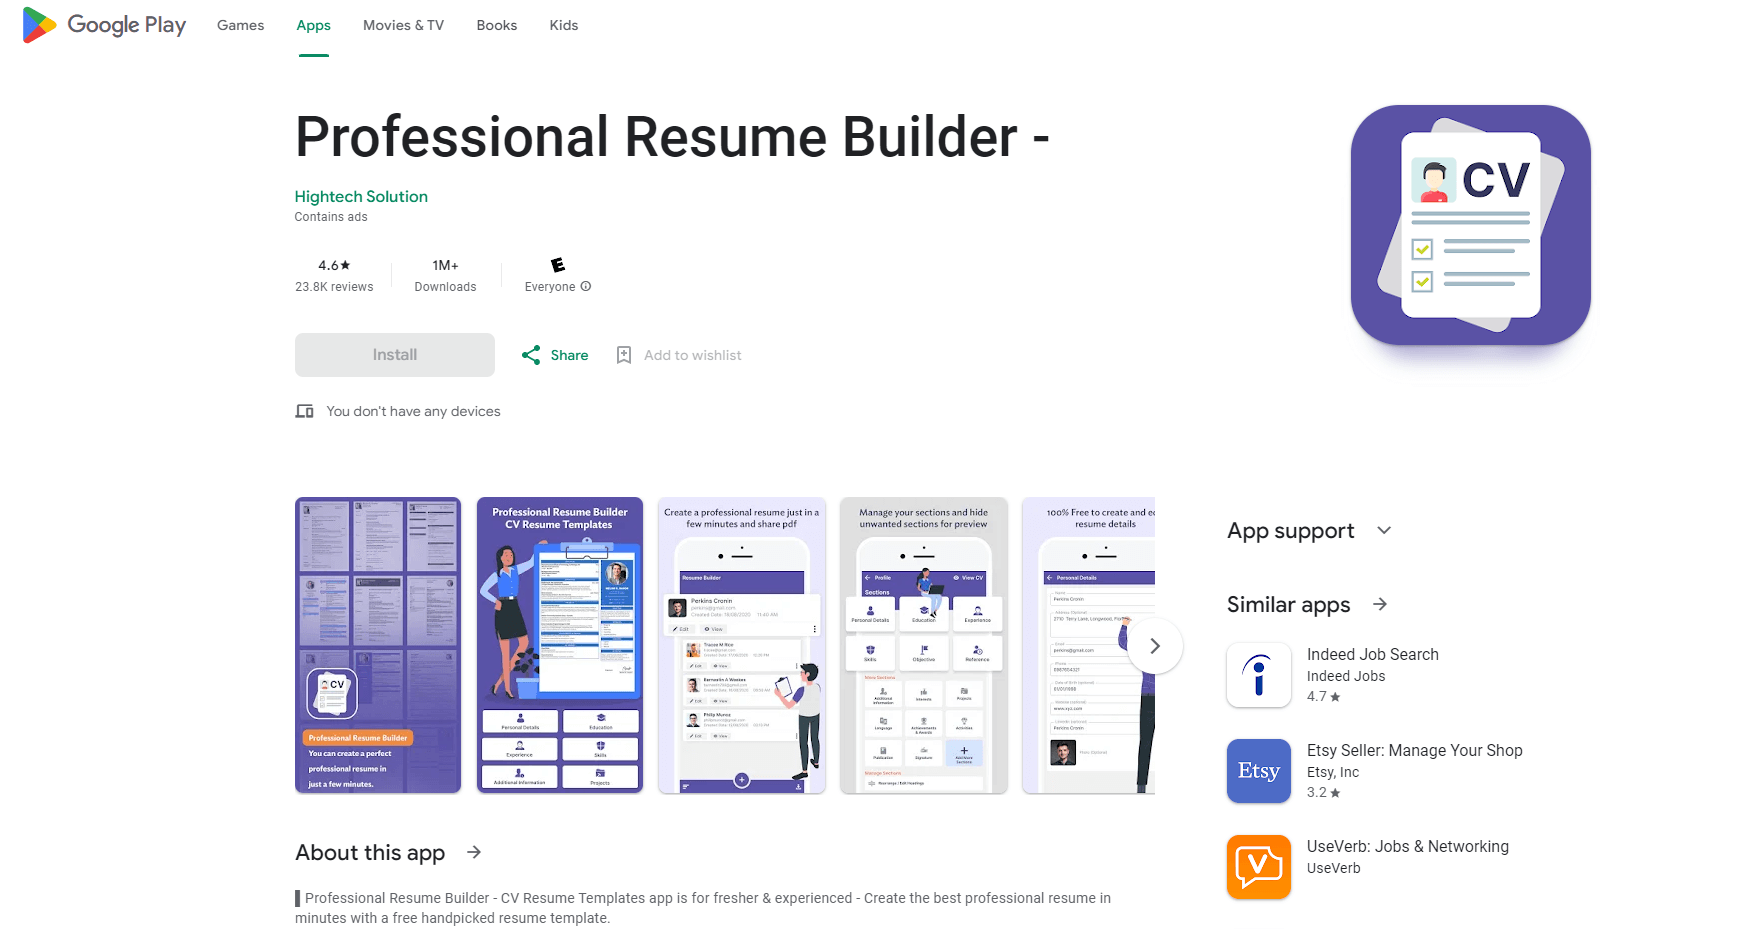 Professional resume builder CV resume templates.